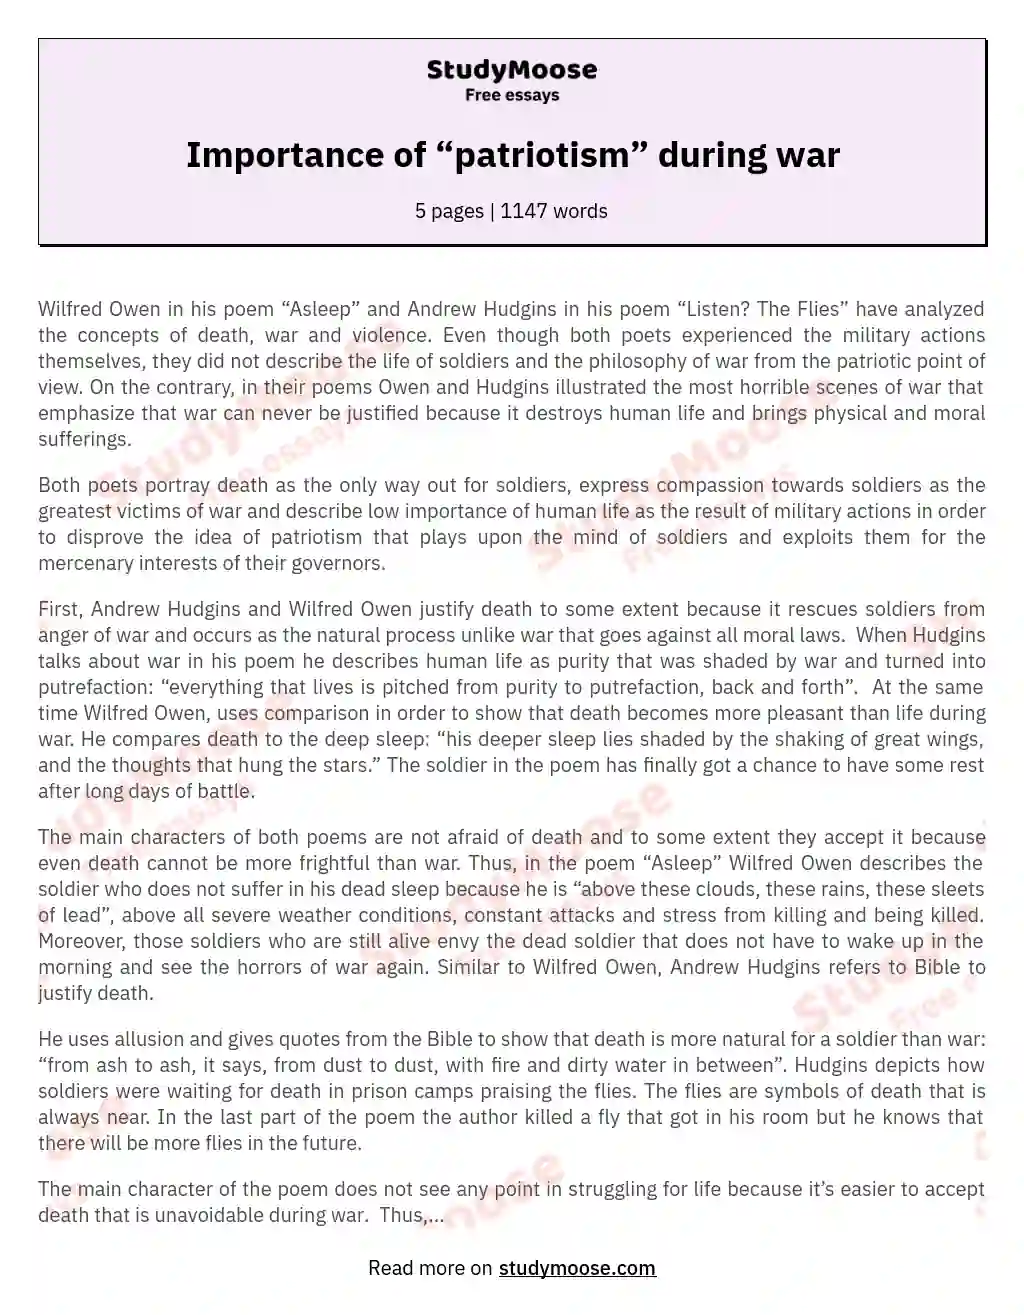 Importance of “patriotism” during war essay